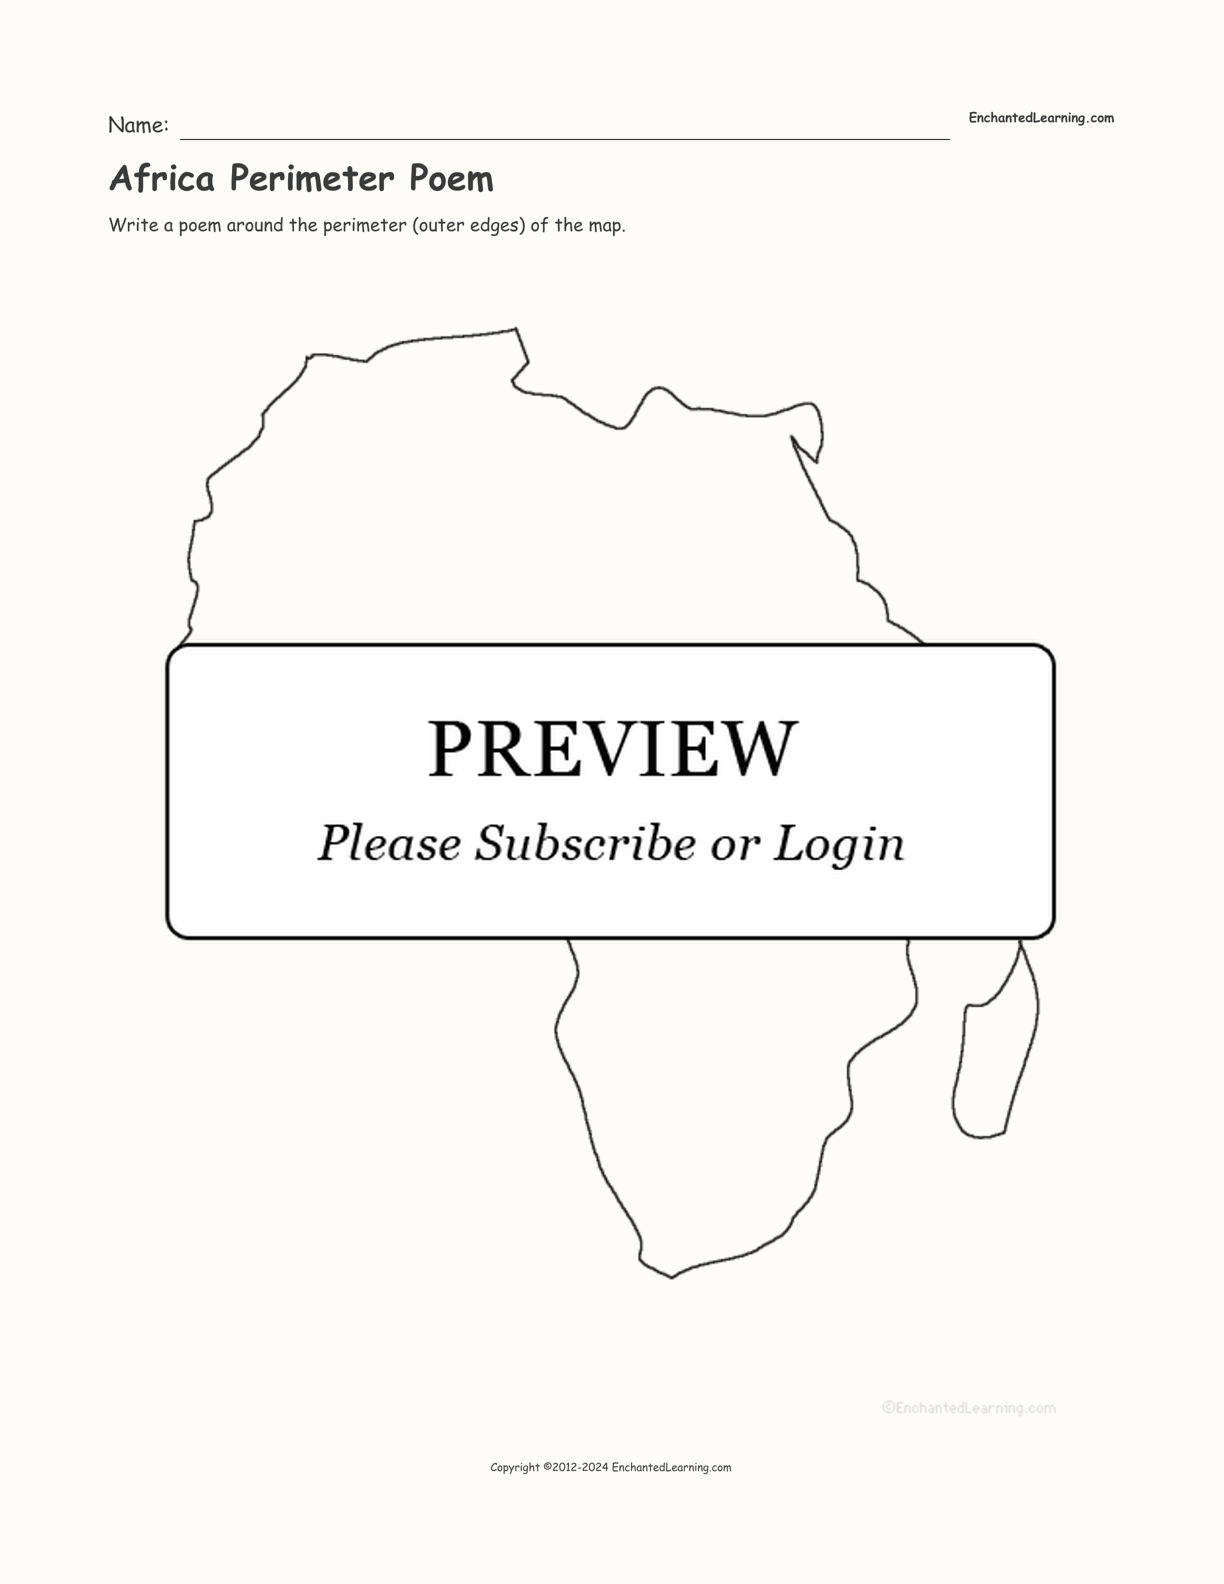 Africa Perimeter Poem interactive worksheet page 1